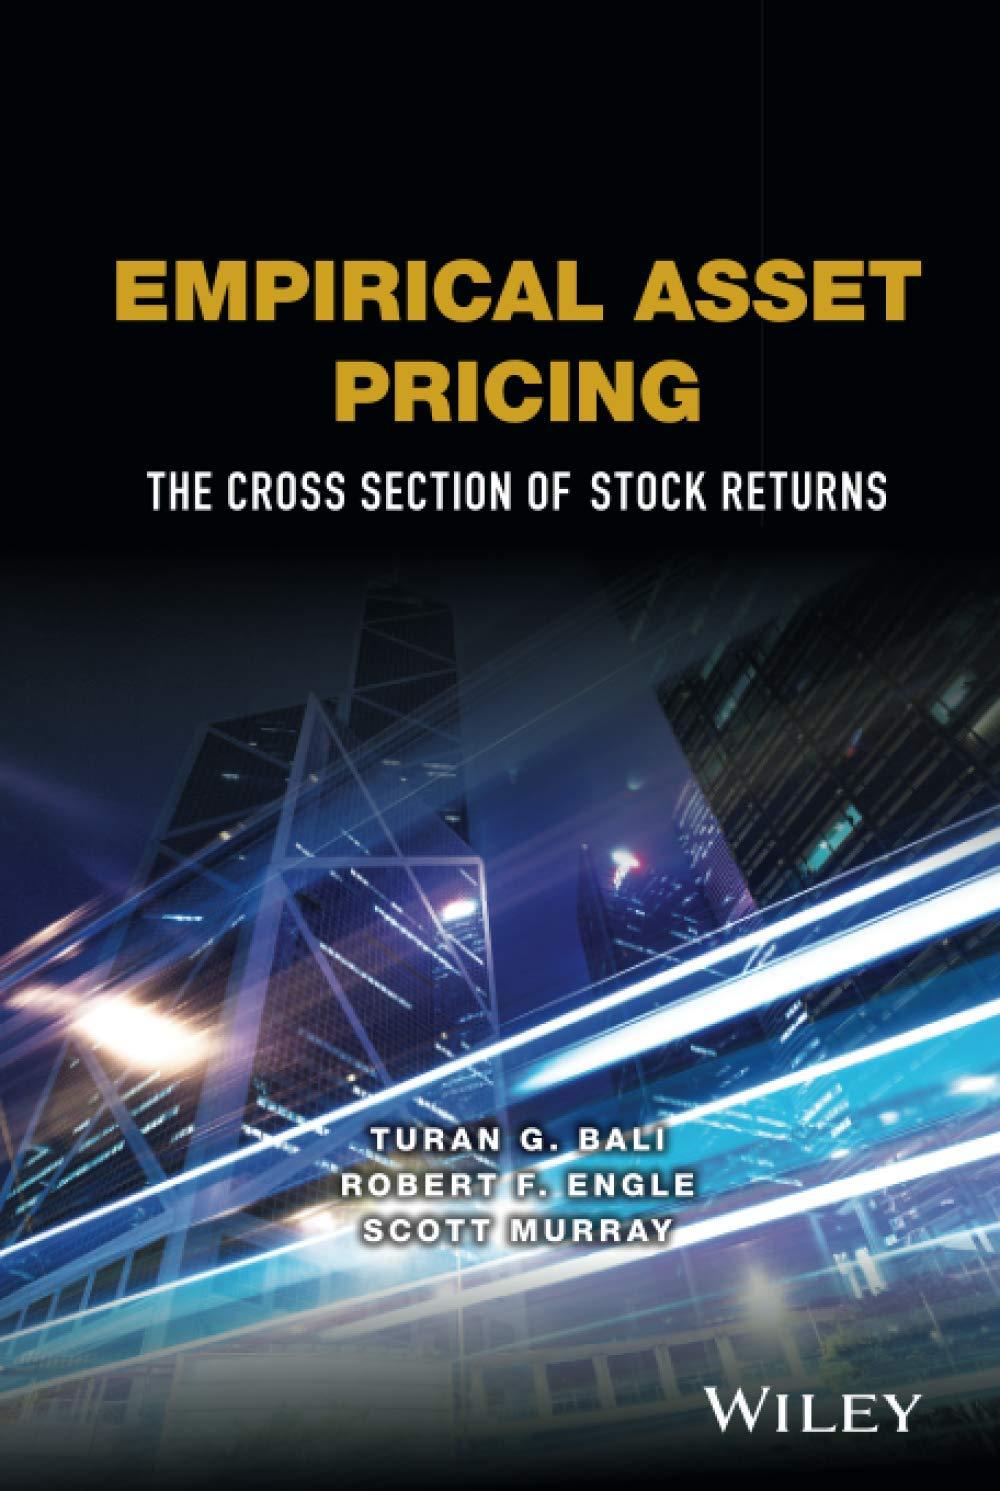 empirical asset pricing the cross section of stock returns 1st edition turan g. bali, robert f. engle, scott